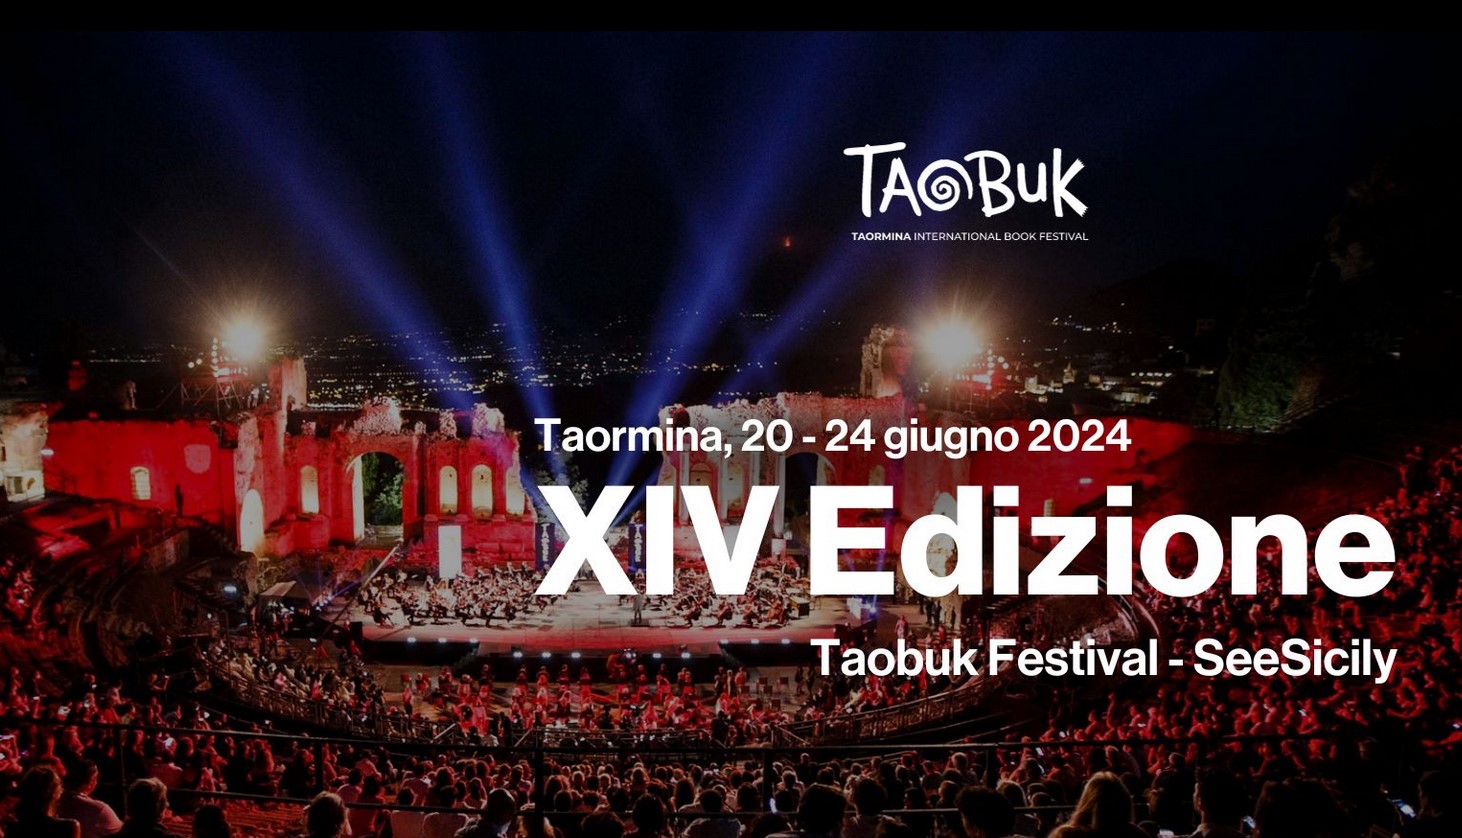 Taobuk 2024: tra gli ospiti, Abramovic, Baricco, Foer, Fosse e Reza